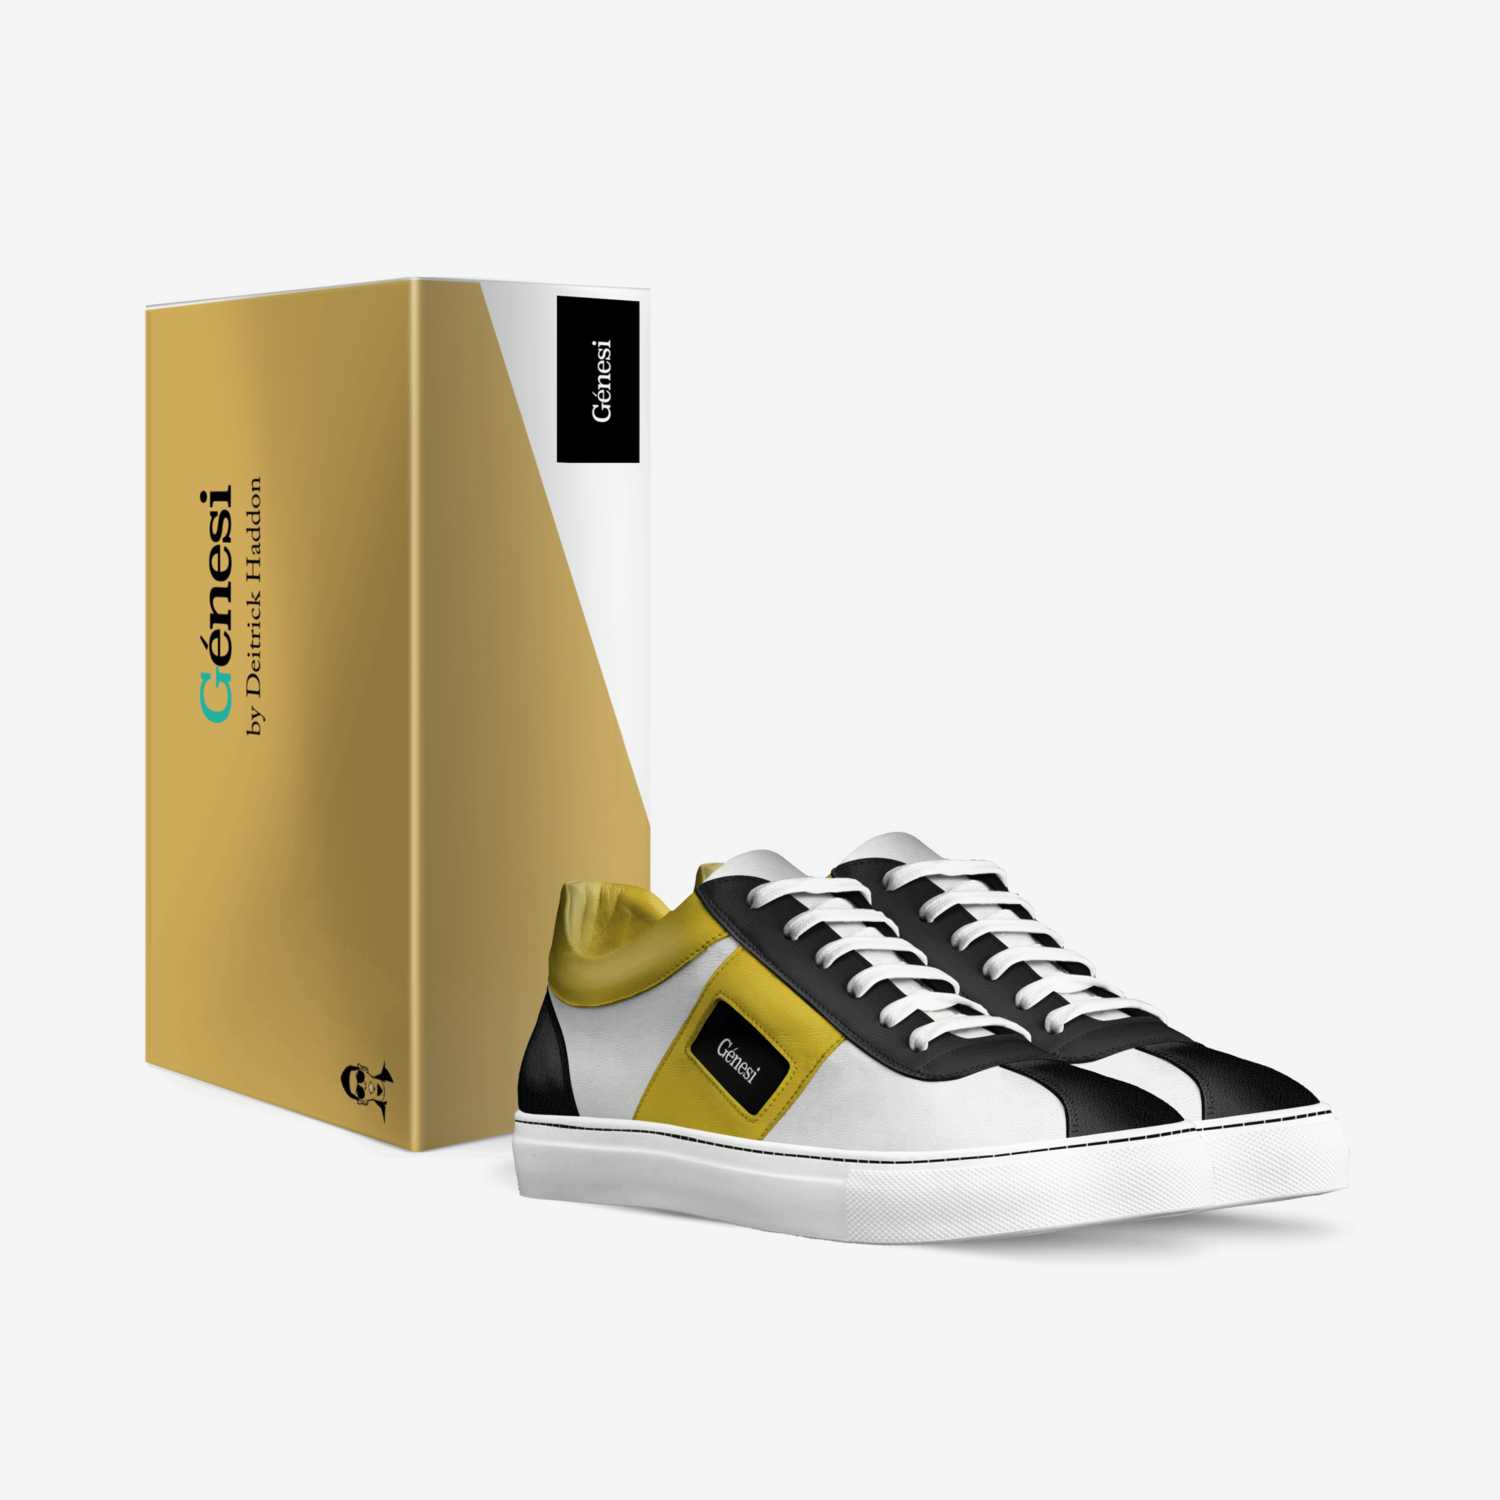 Génesi custom made in Italy shoes by Deitrick Haddon | Box view